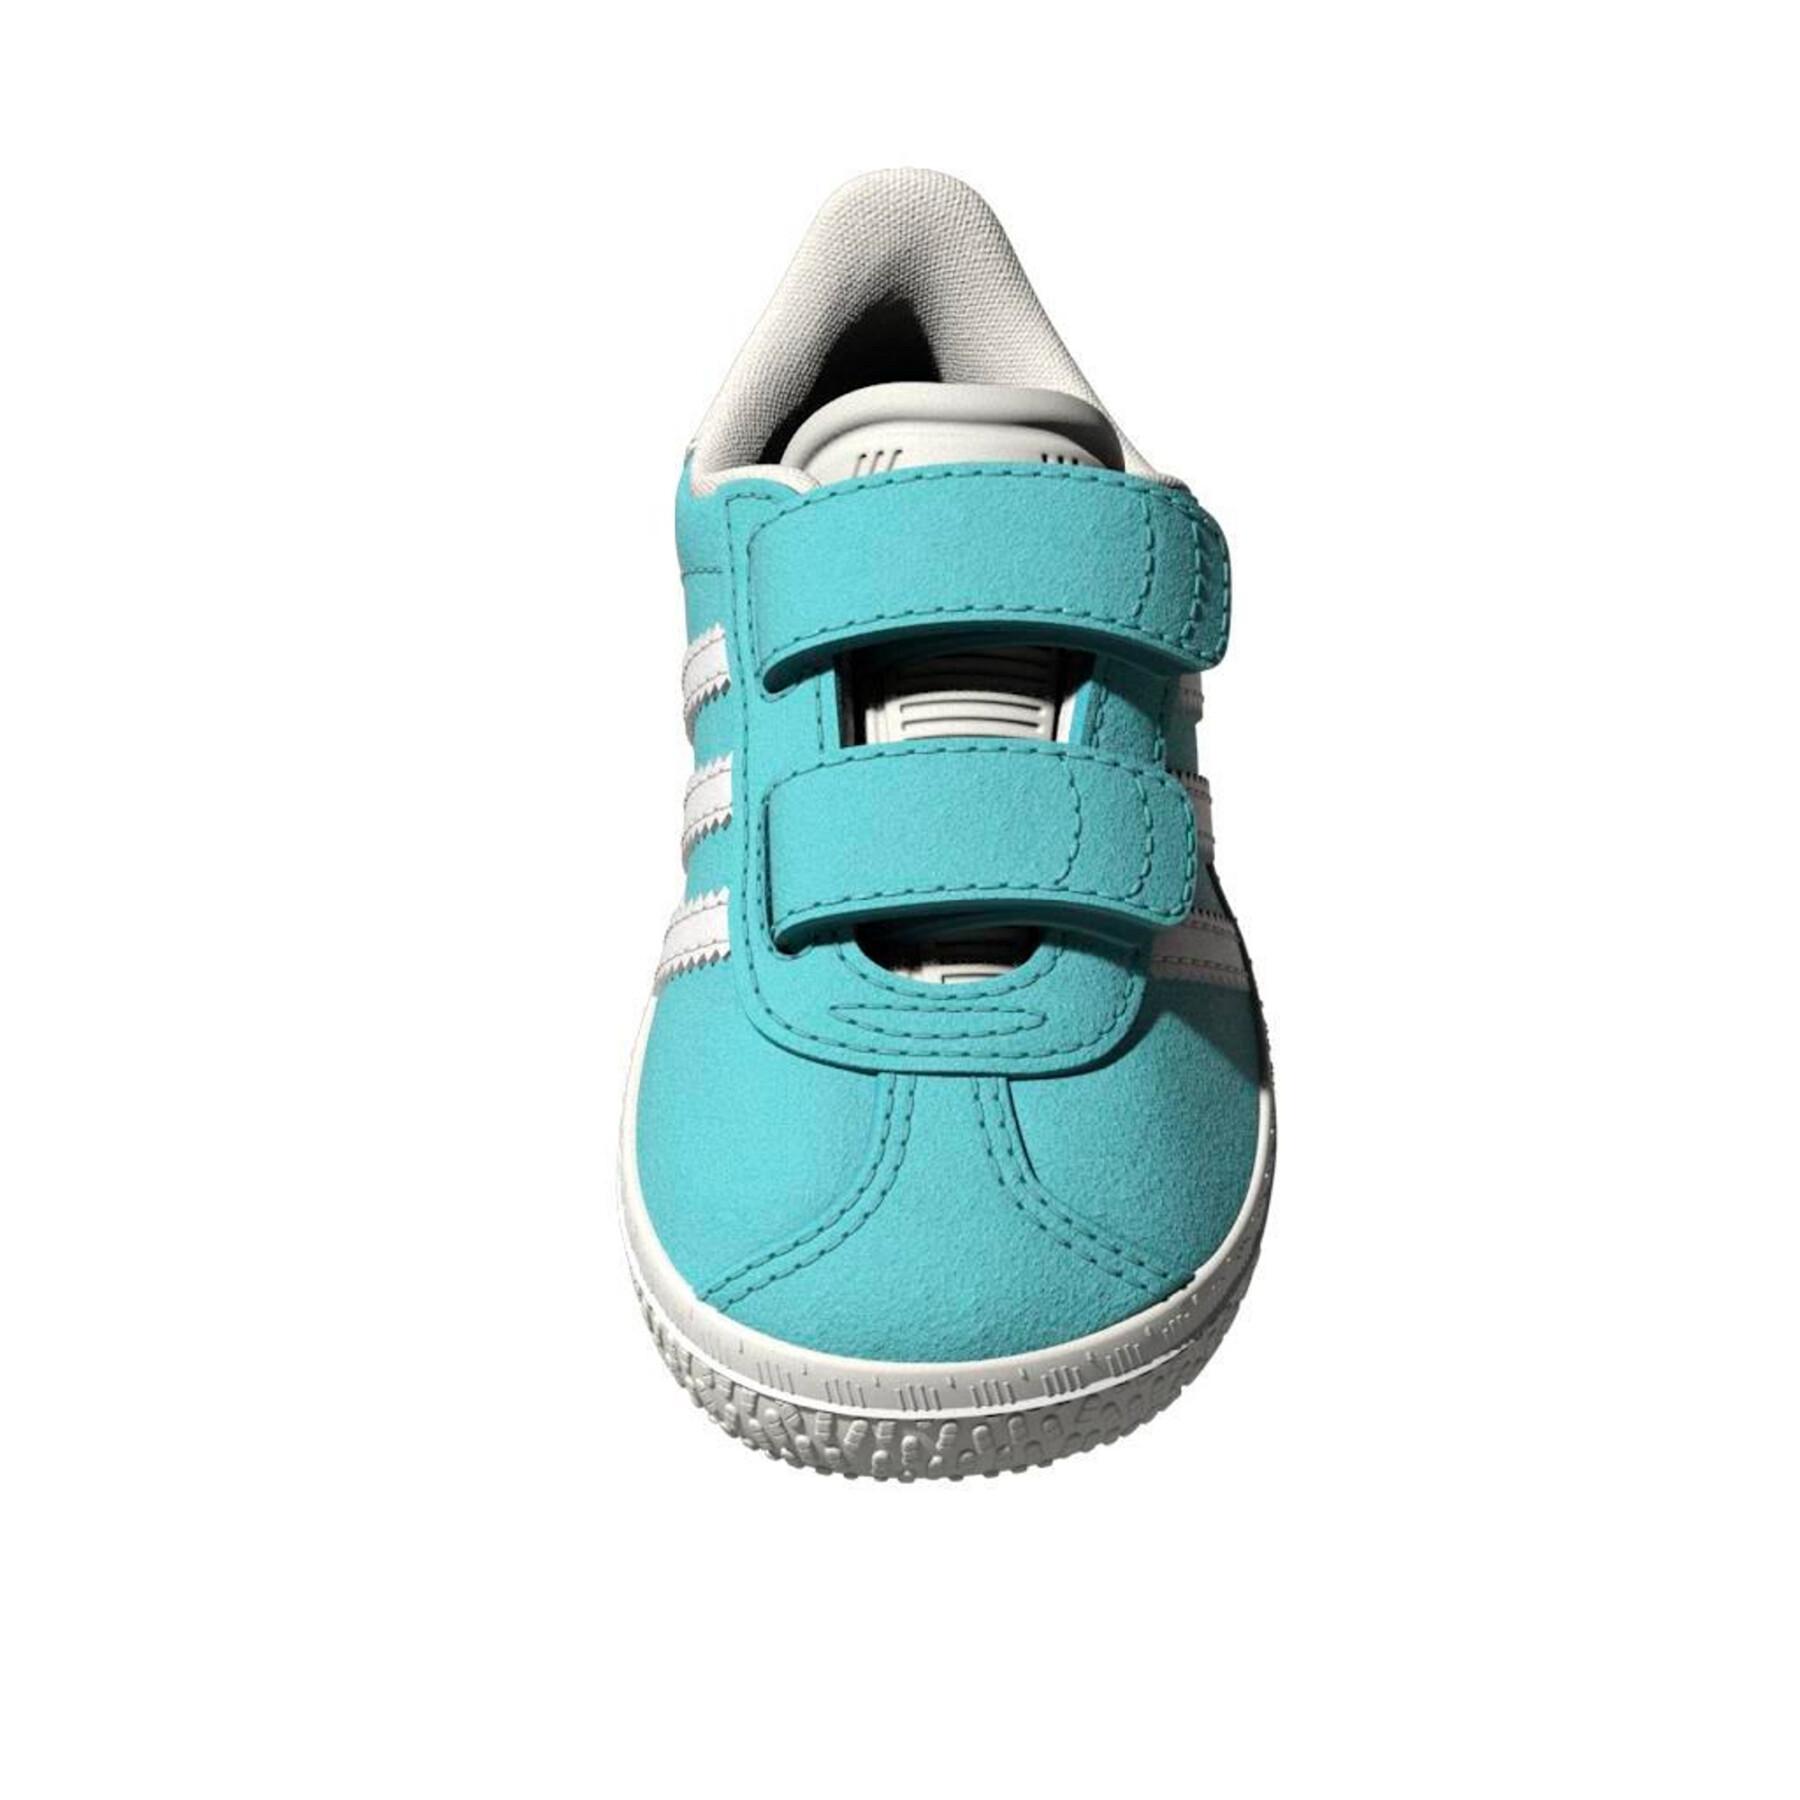 Baby shoes adidas Originals Gazelle